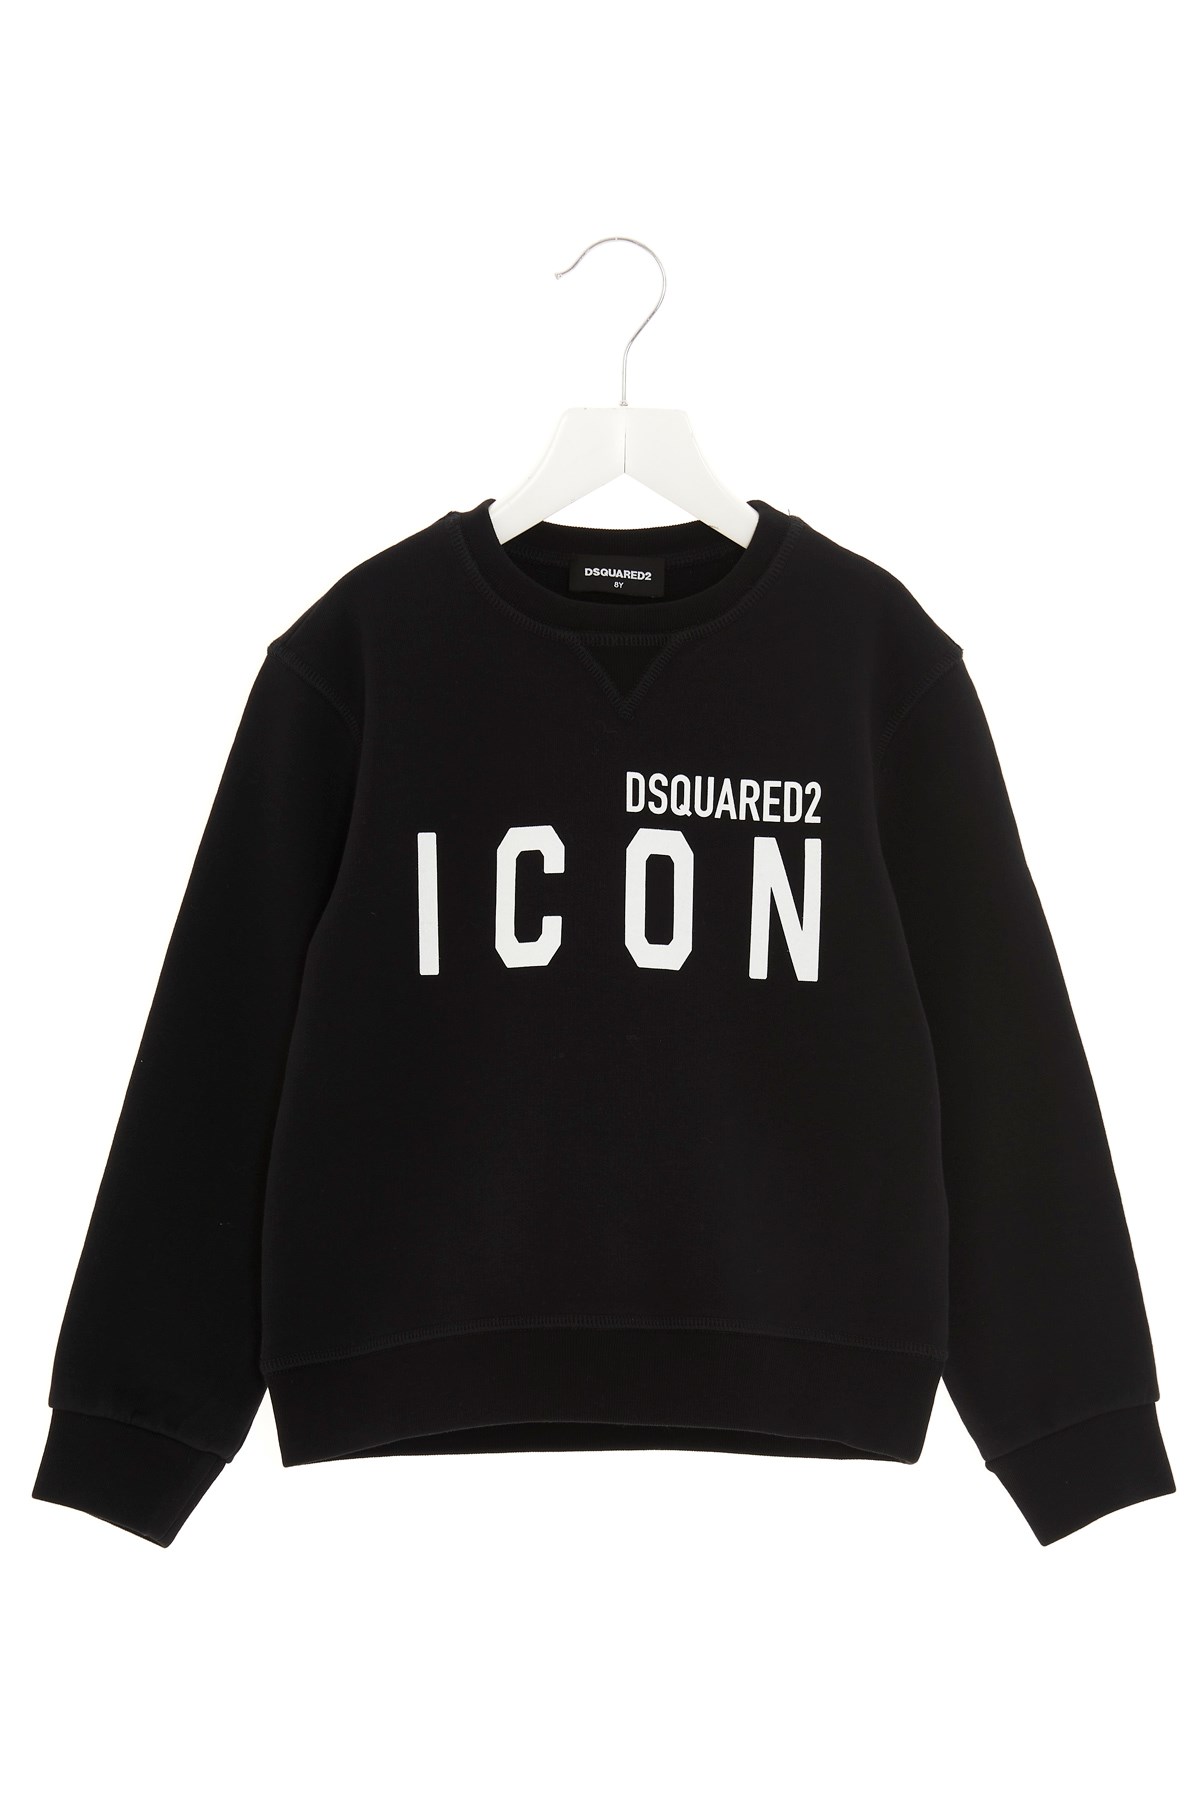 DSQUARED2 'Icon' Sweatshirt